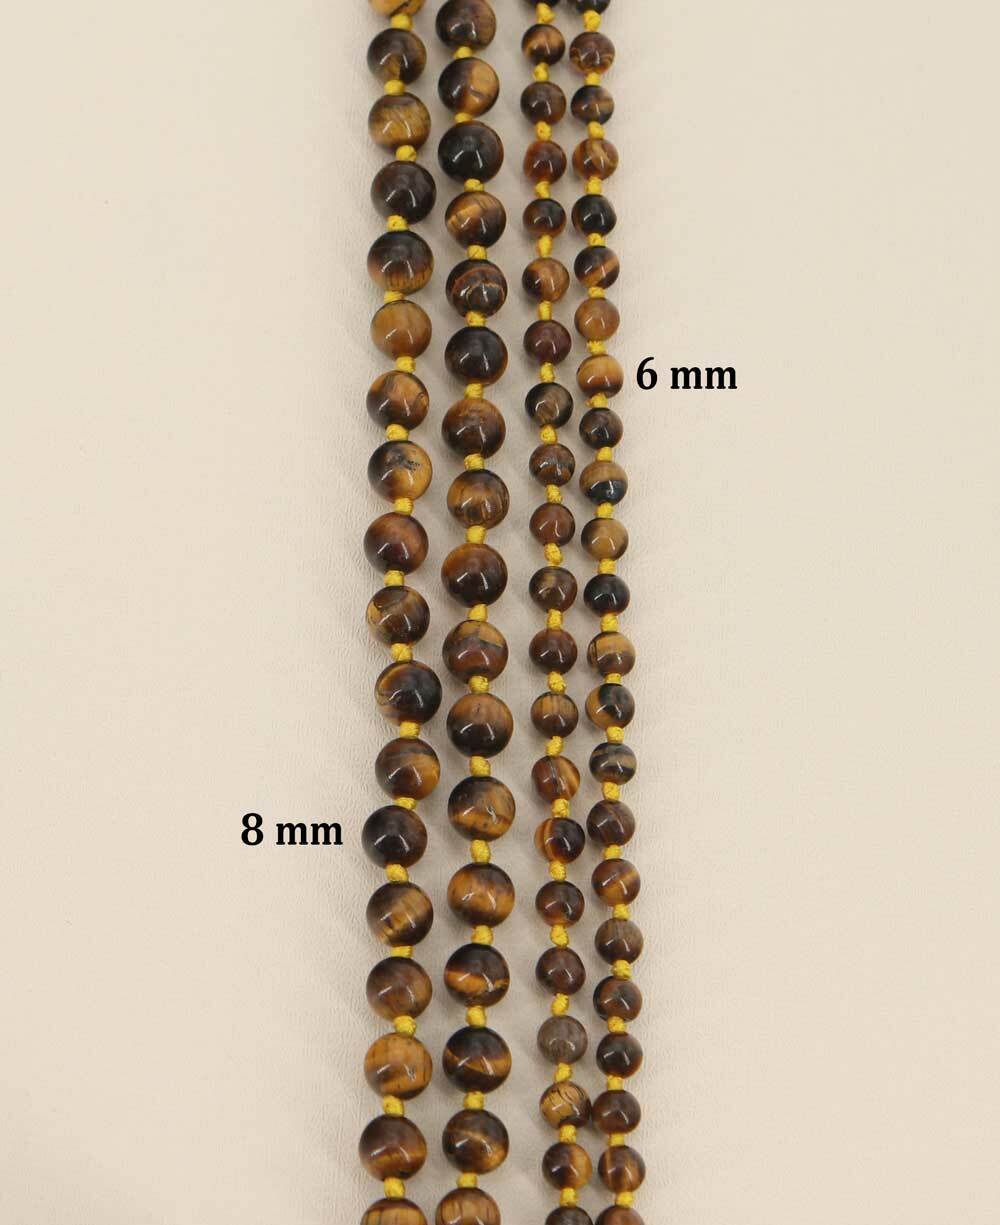 Tiger's Eye Meditation Mala, Knotted 108 Beads - Prayer Beads 6mm